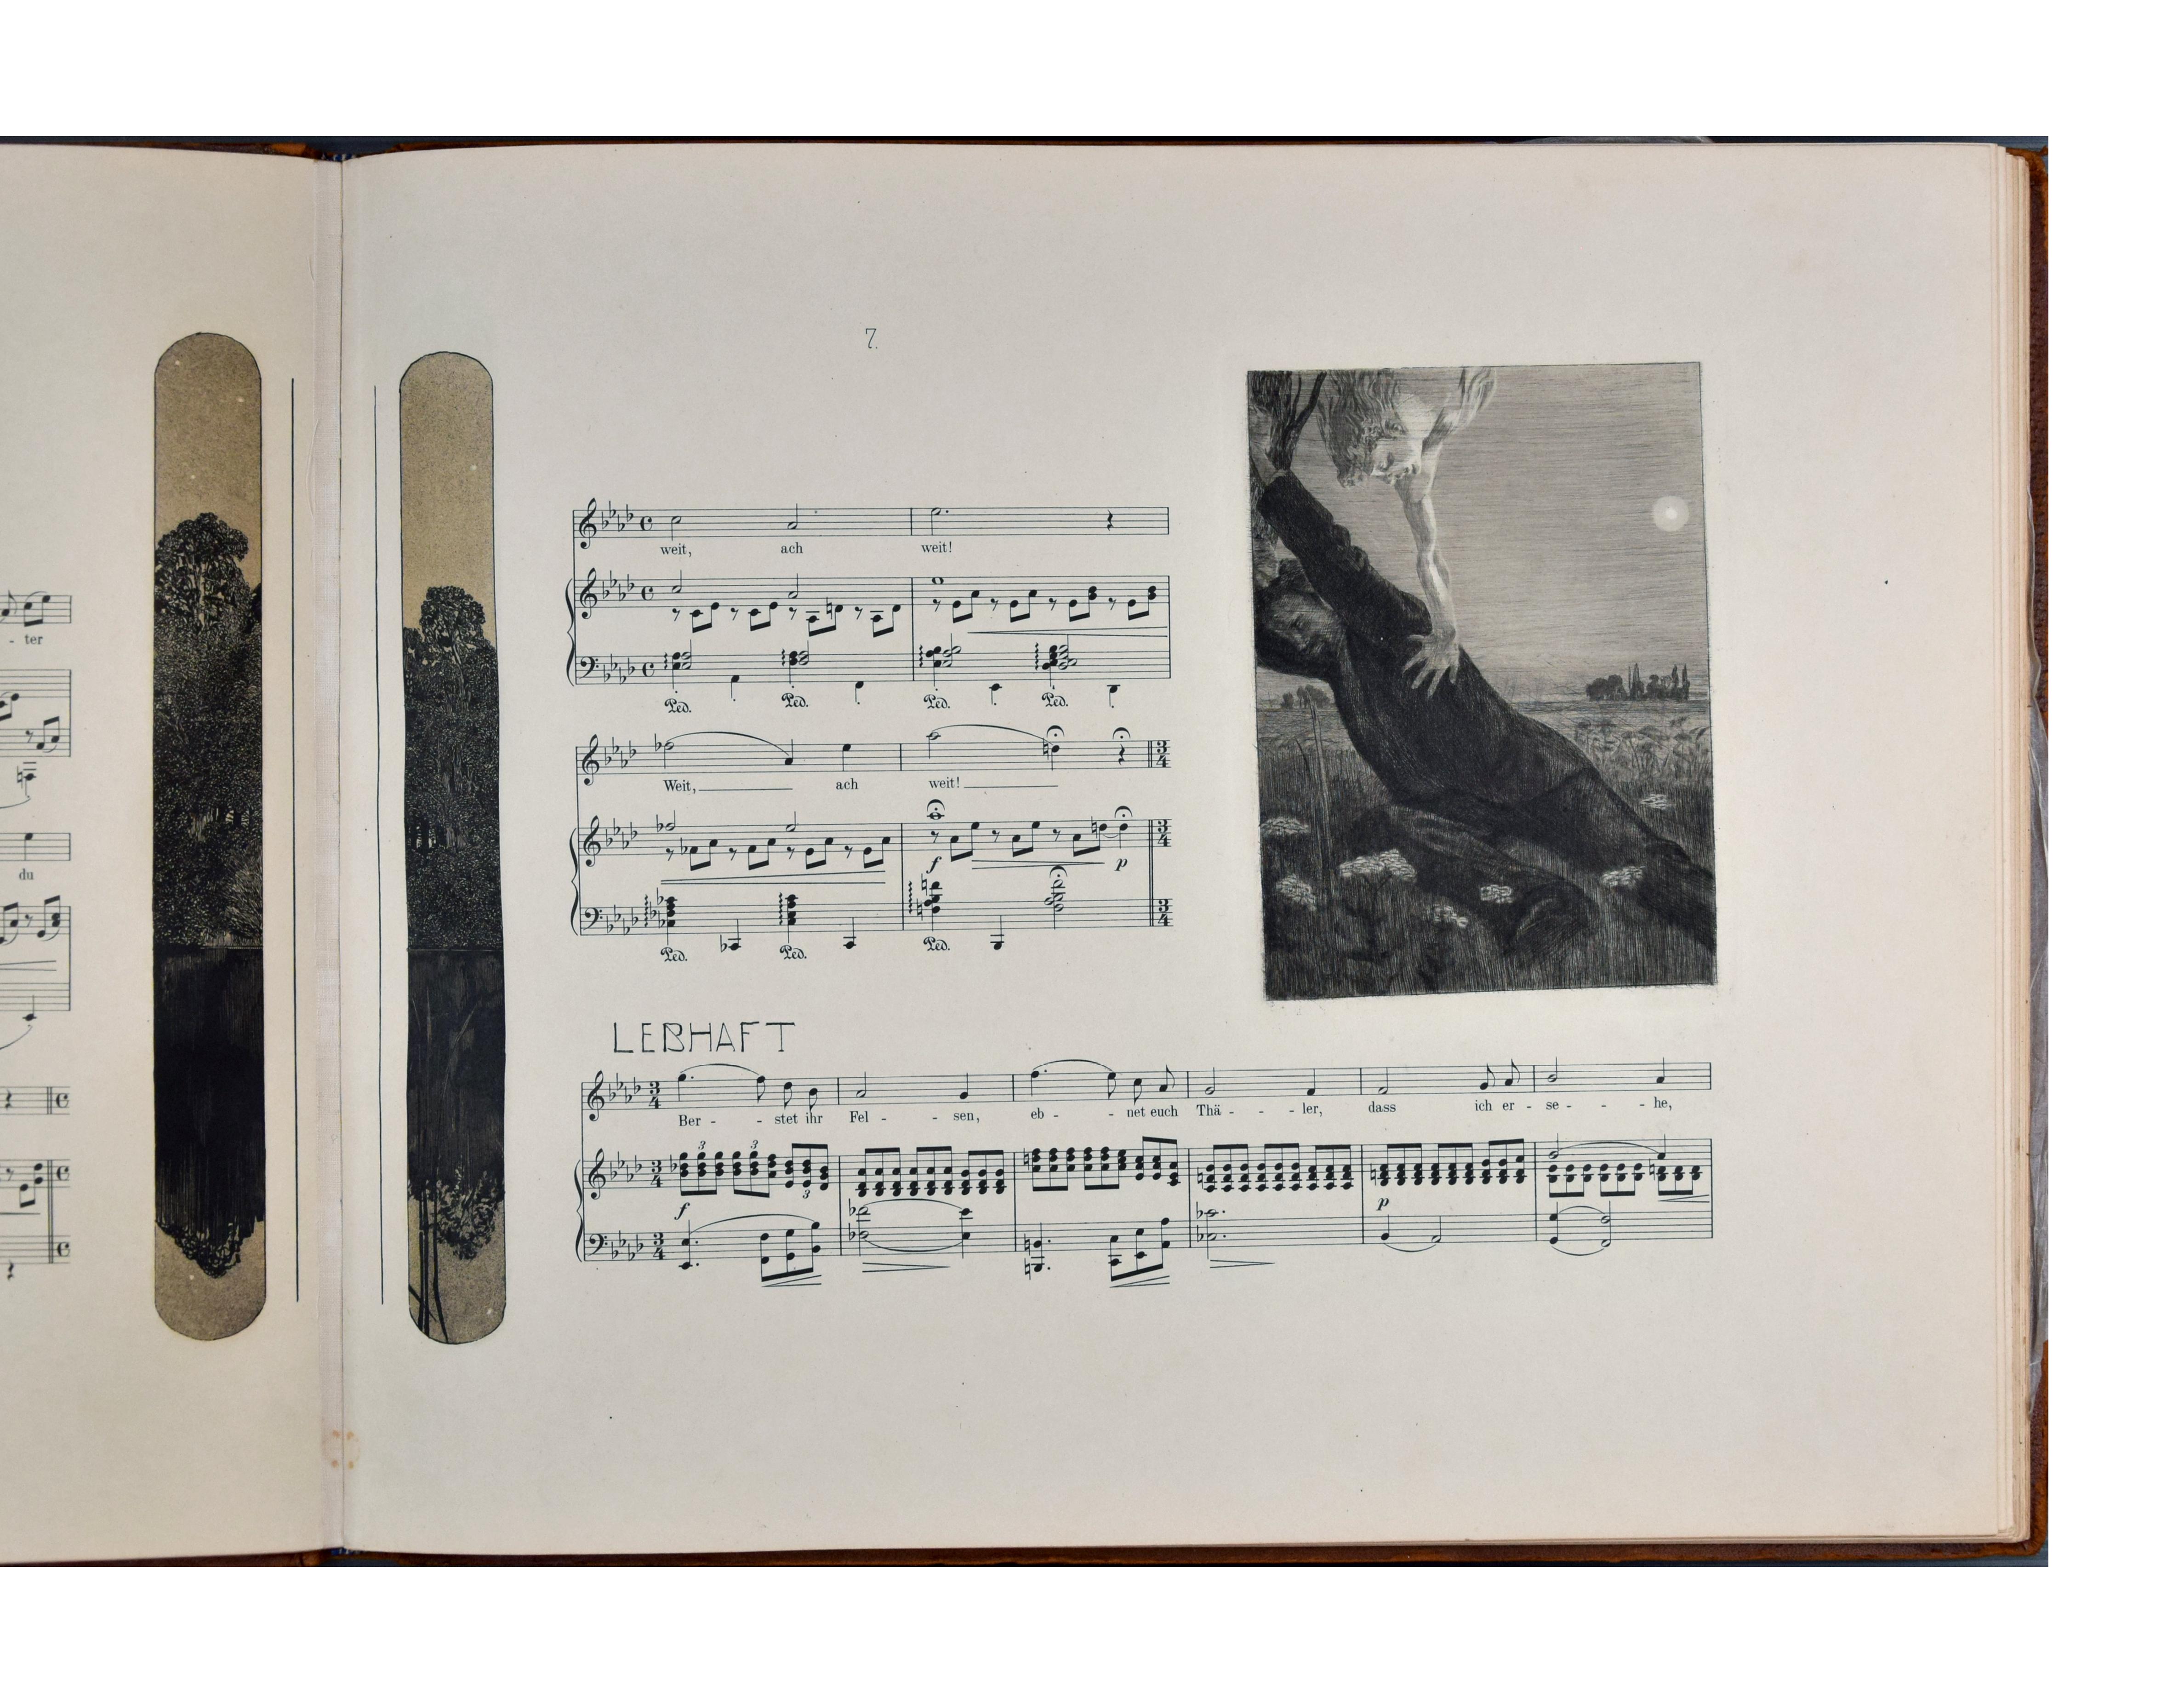 Brahms-Phantasie - Rare Portfolio of 41 Engravings by Max Klinger - 1894 For Sale 4